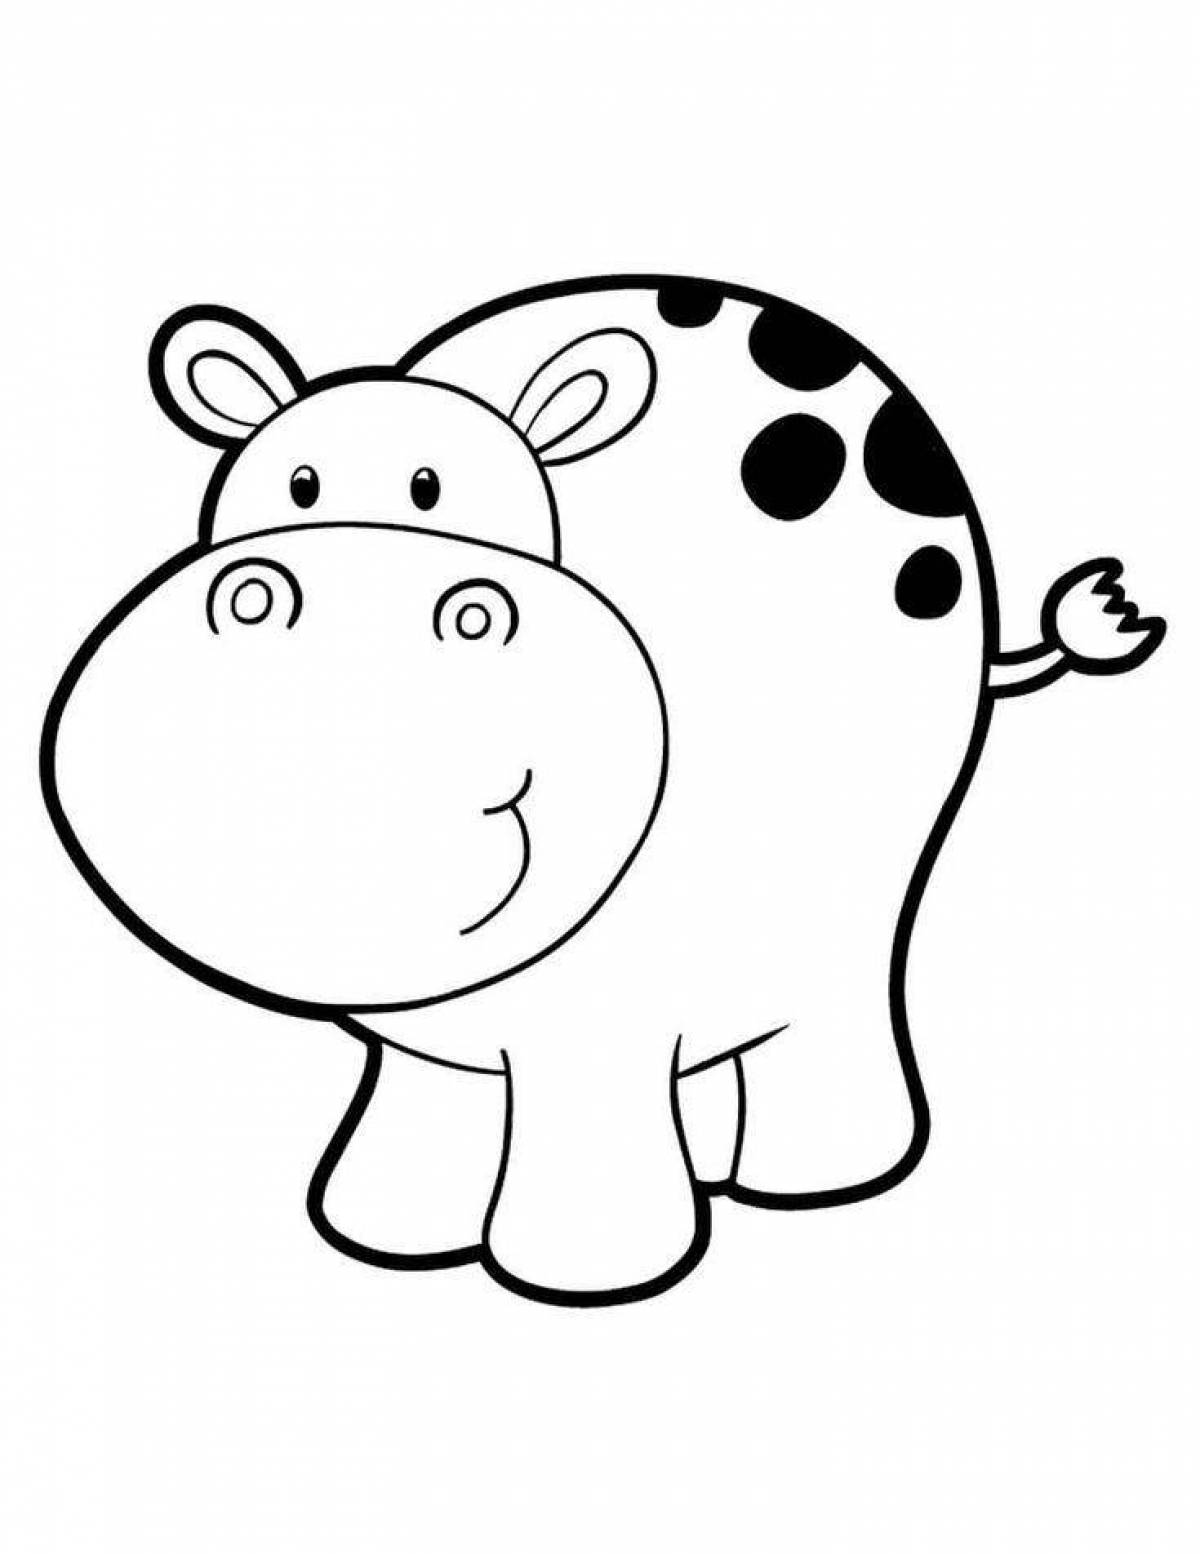 Coloring page playful hippopotamus